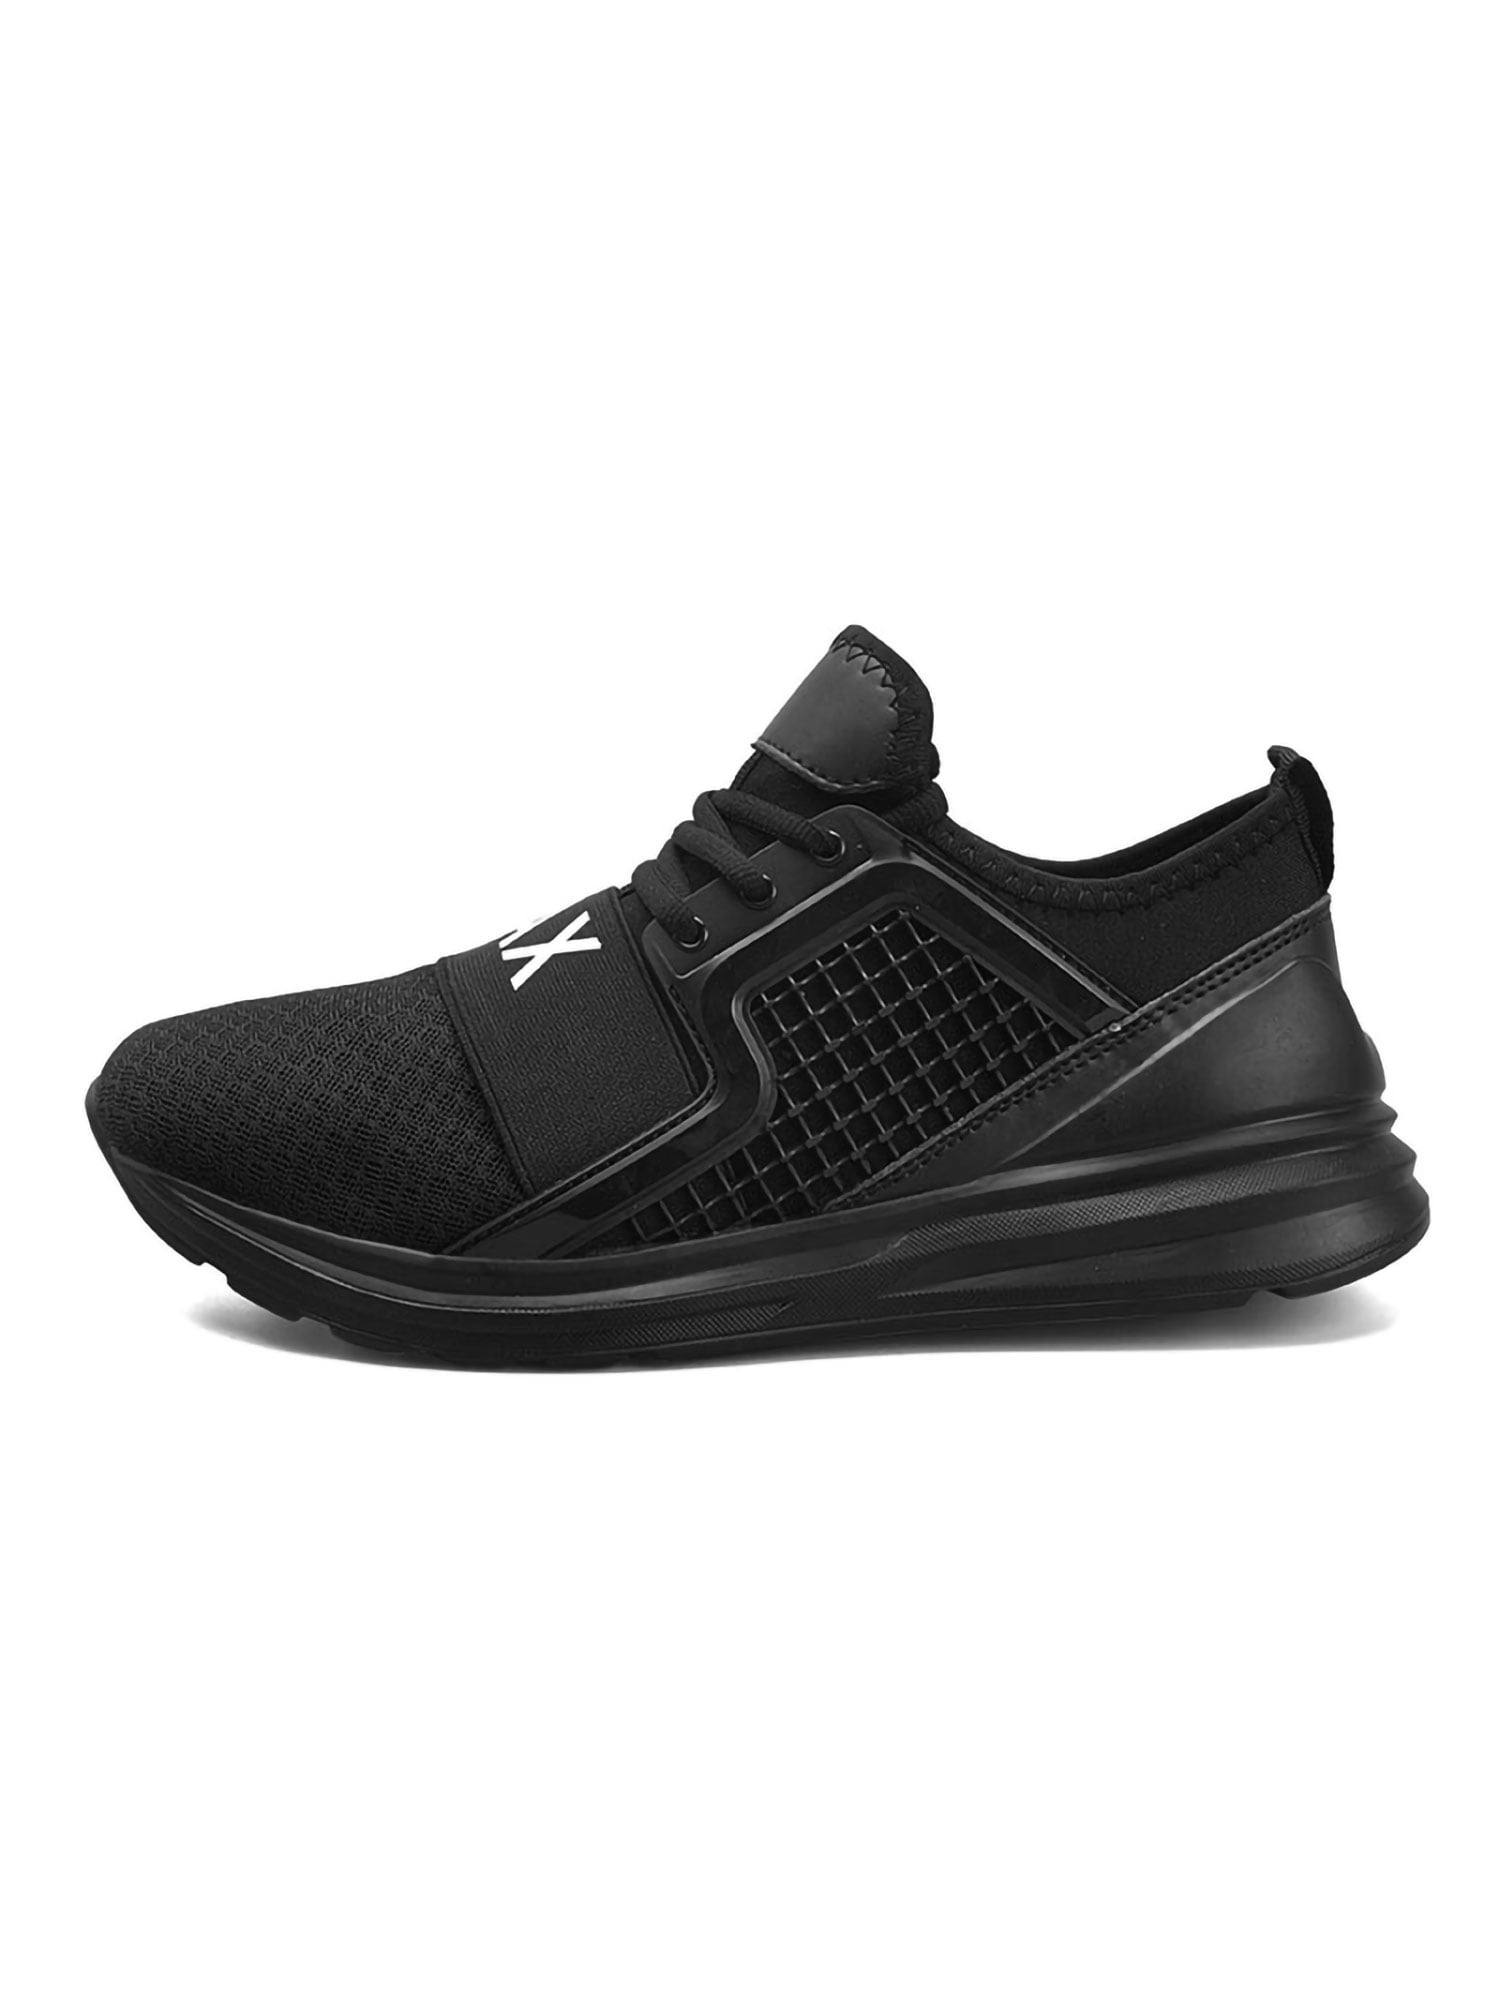 باستا شيل Avamo Mens Casual Sneakers Walking Sports Running Trainers Breathable  Athletic Shoes باستا شيل